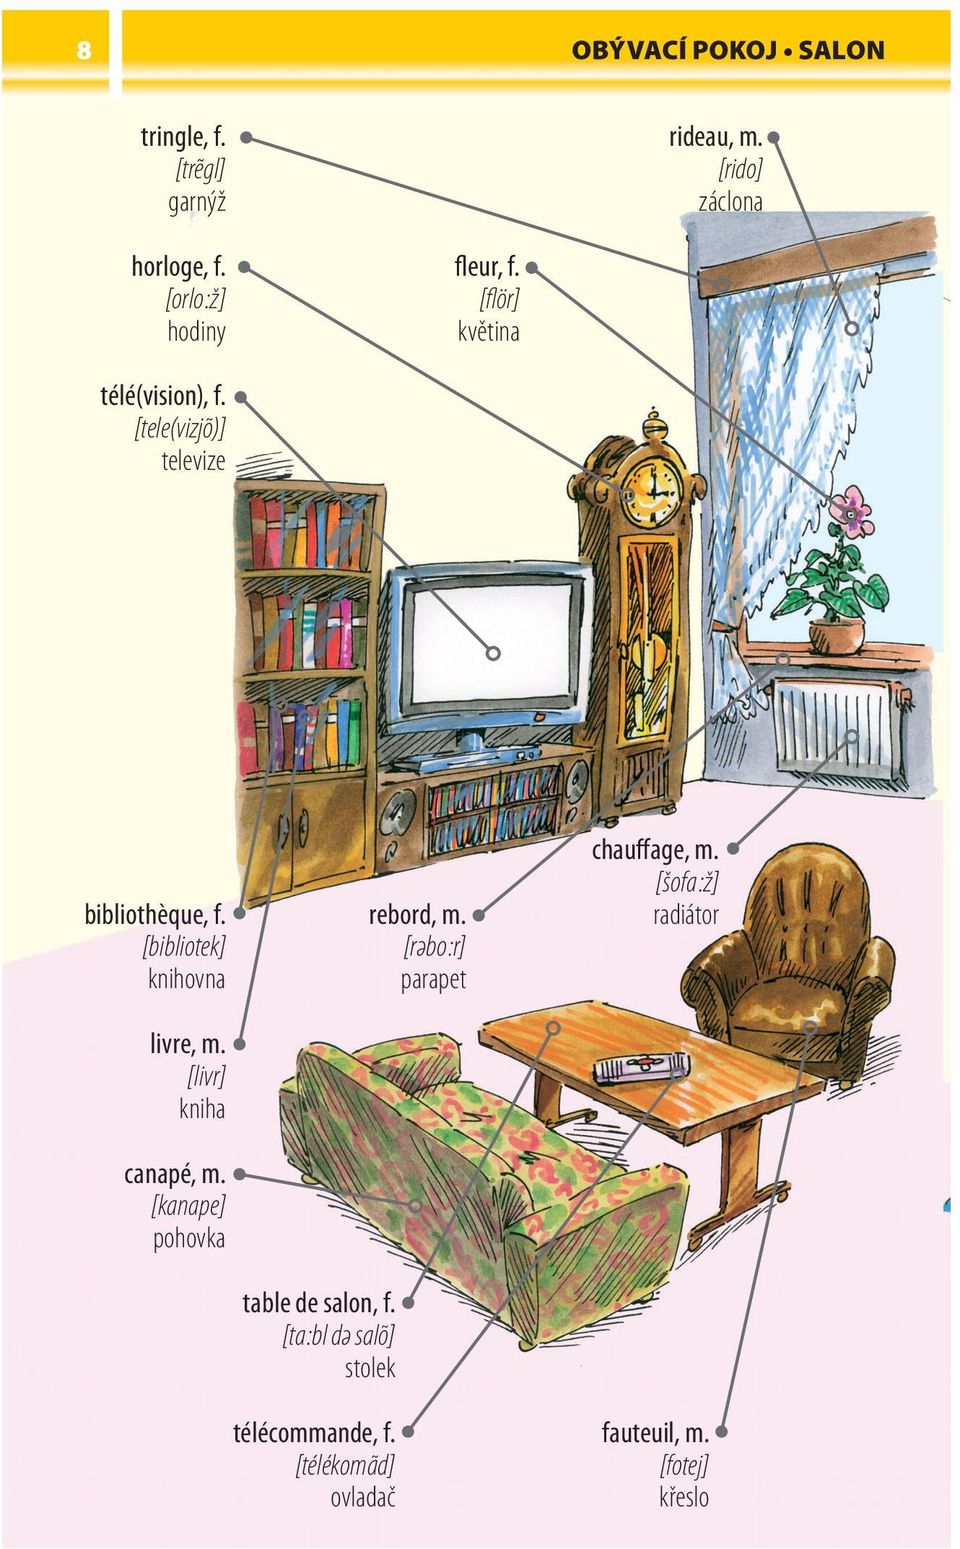 [bibliotek] knihovna livre, m. [livr] kniha canapé, m. [kanape] pohovka table de salon, f.